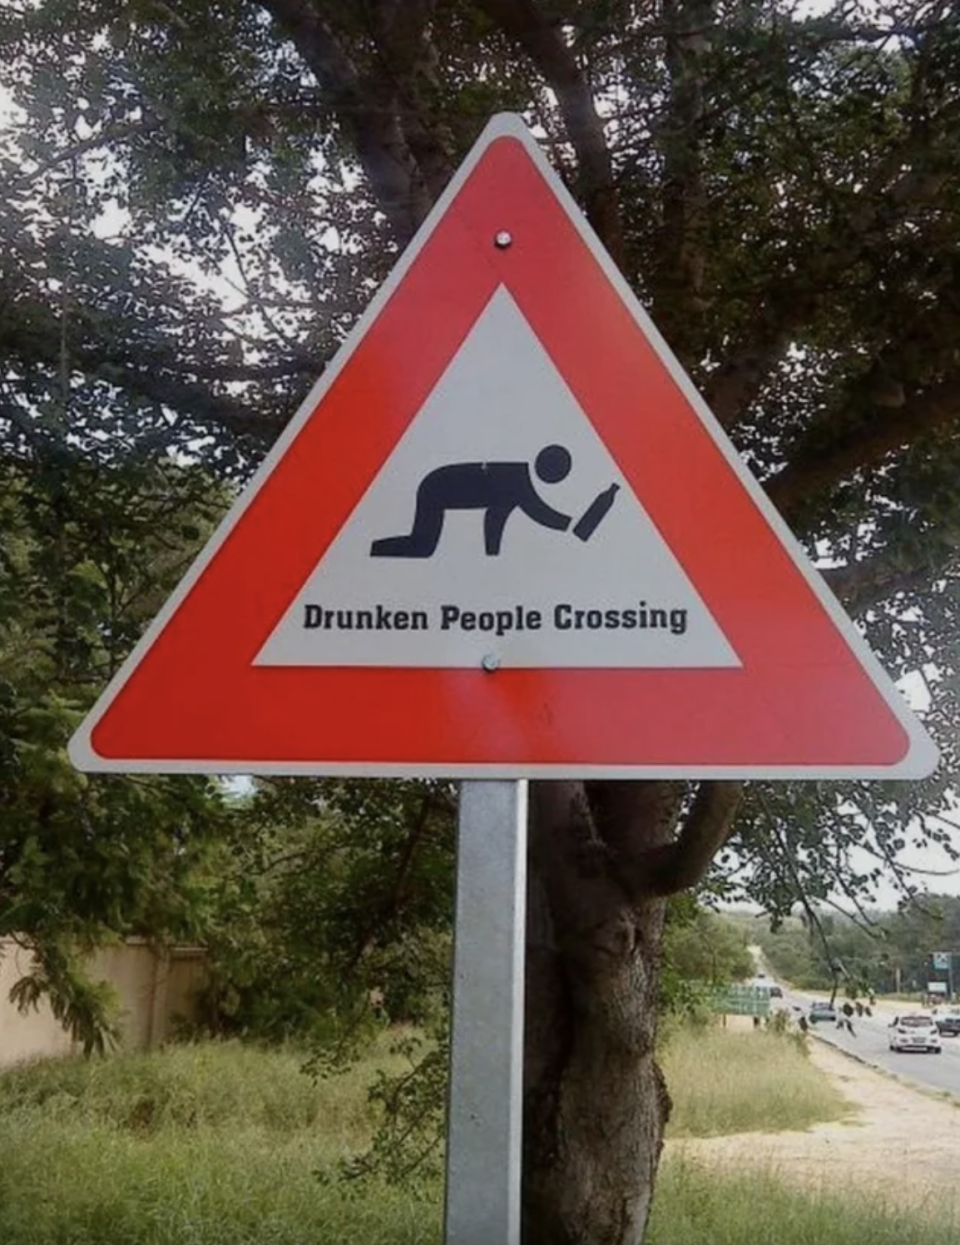 "Drunken people crossing"